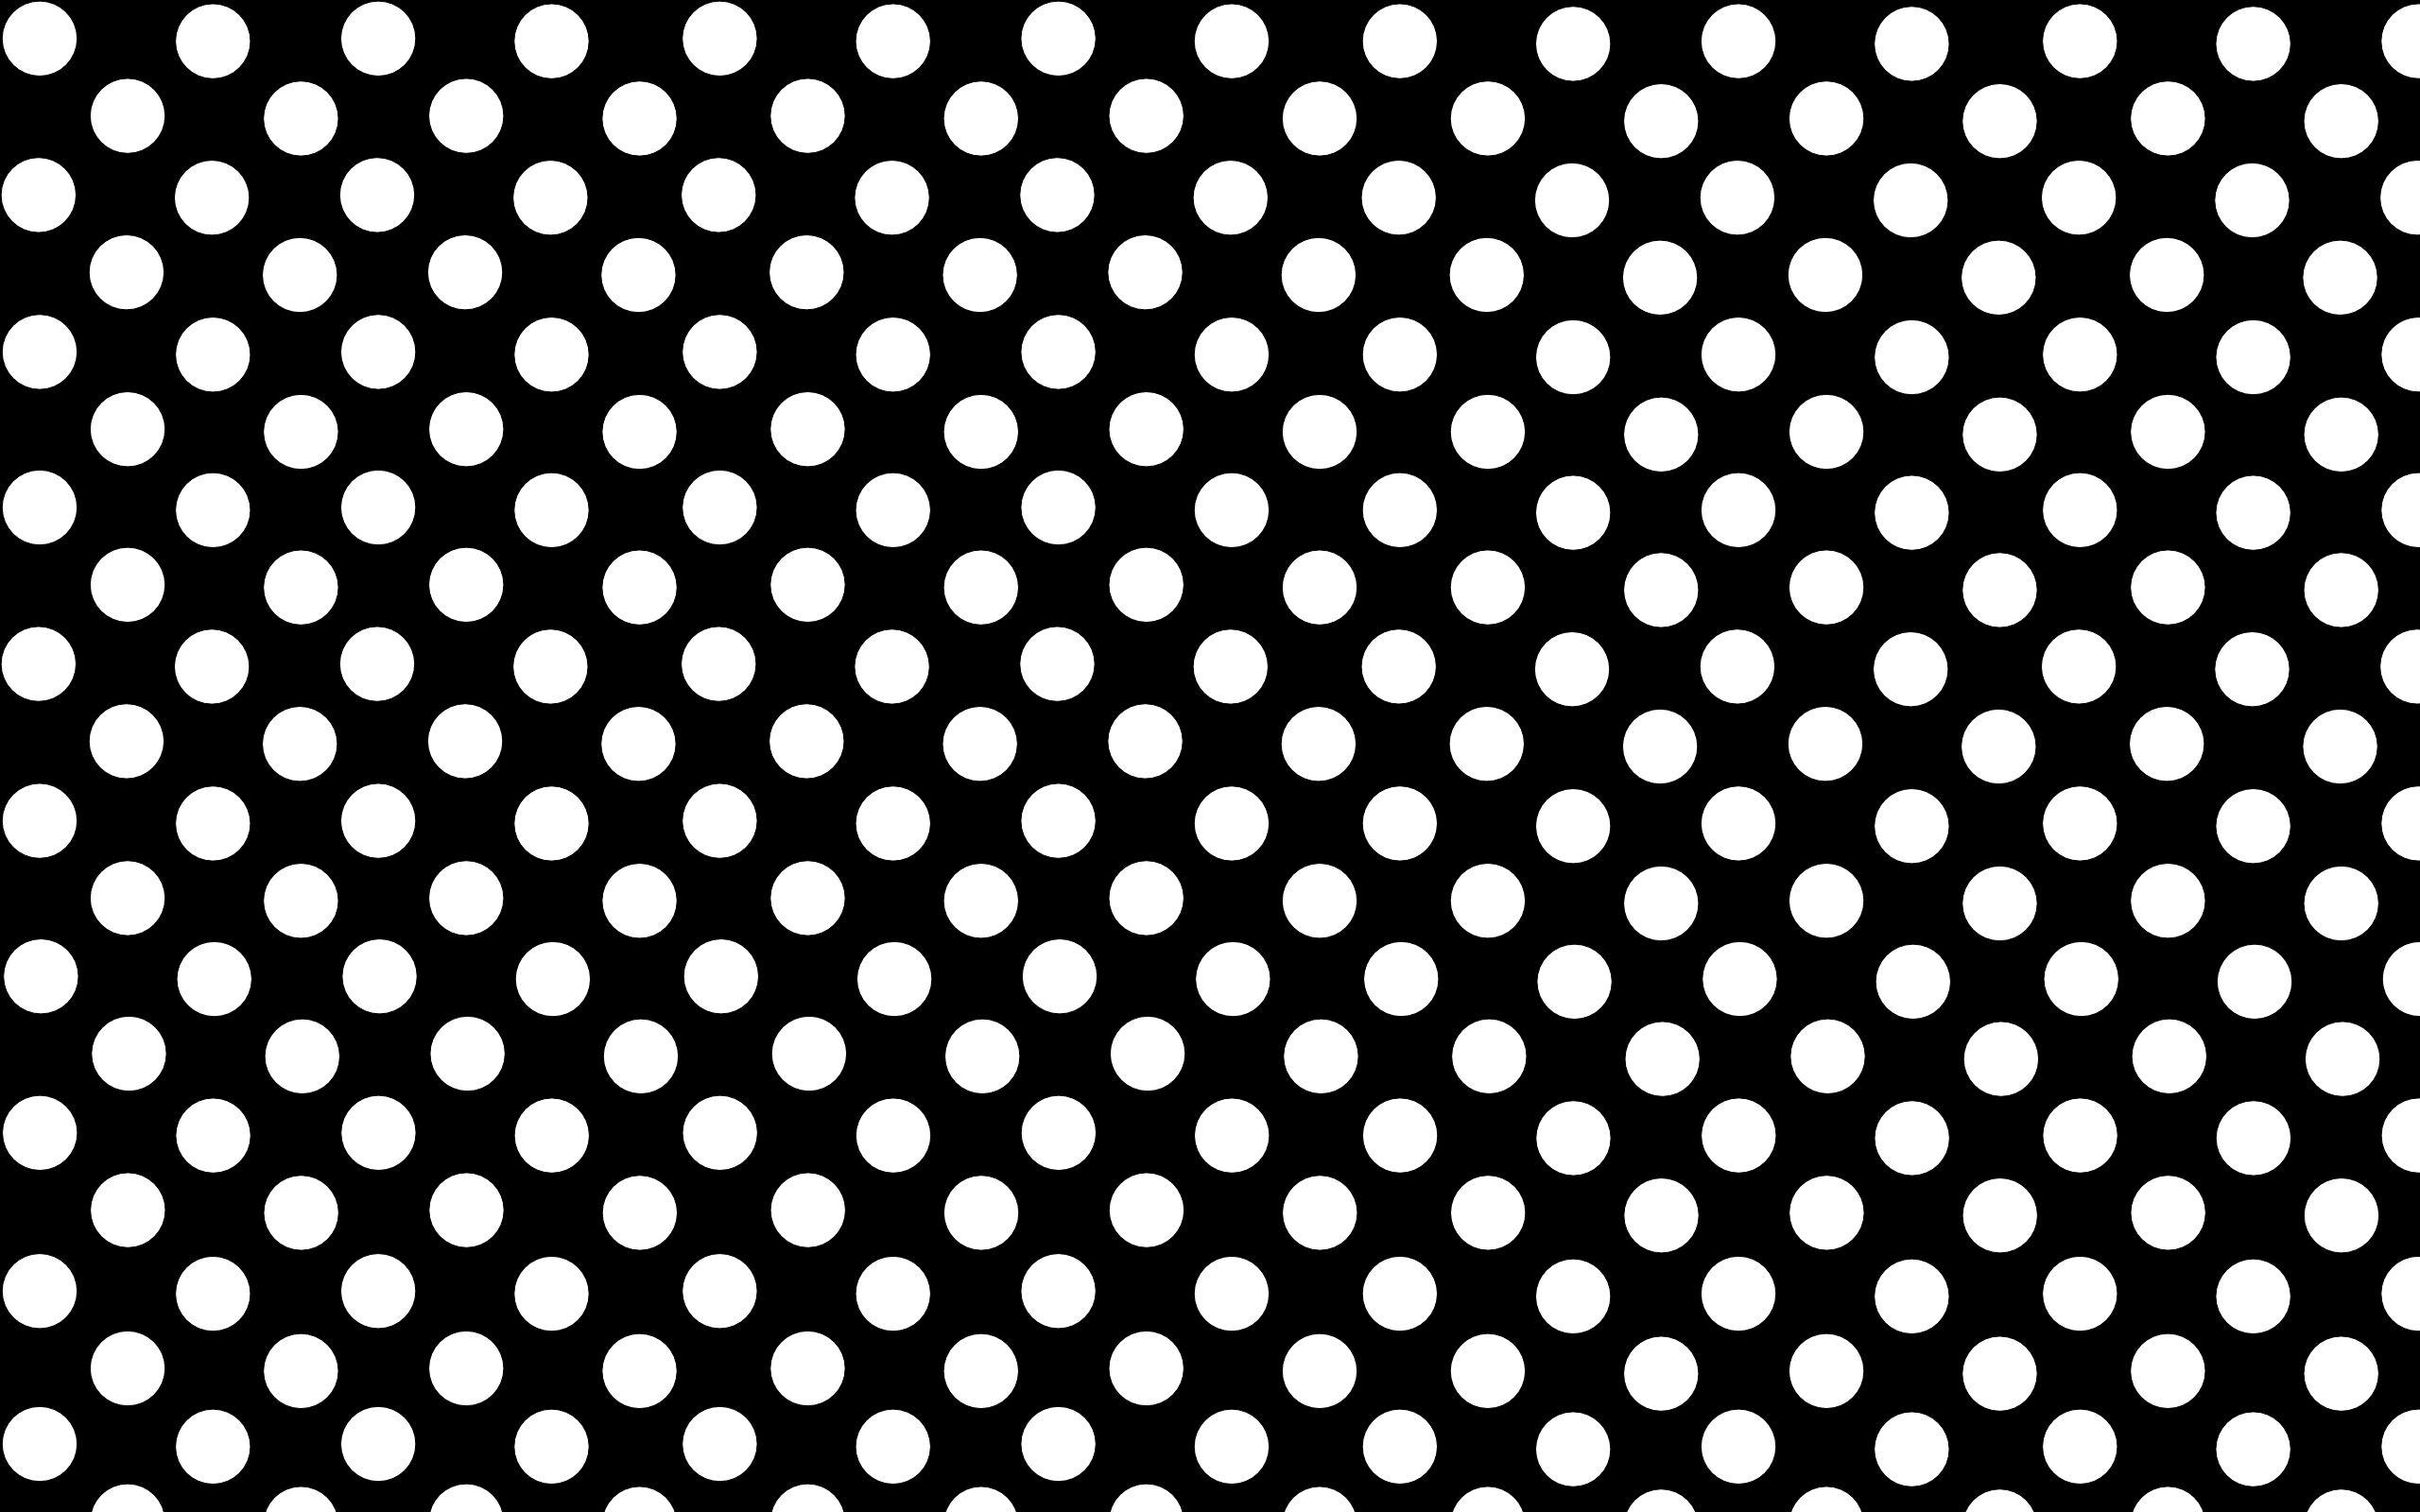 White and Black Polka Dot Nail Art Design - wide 1